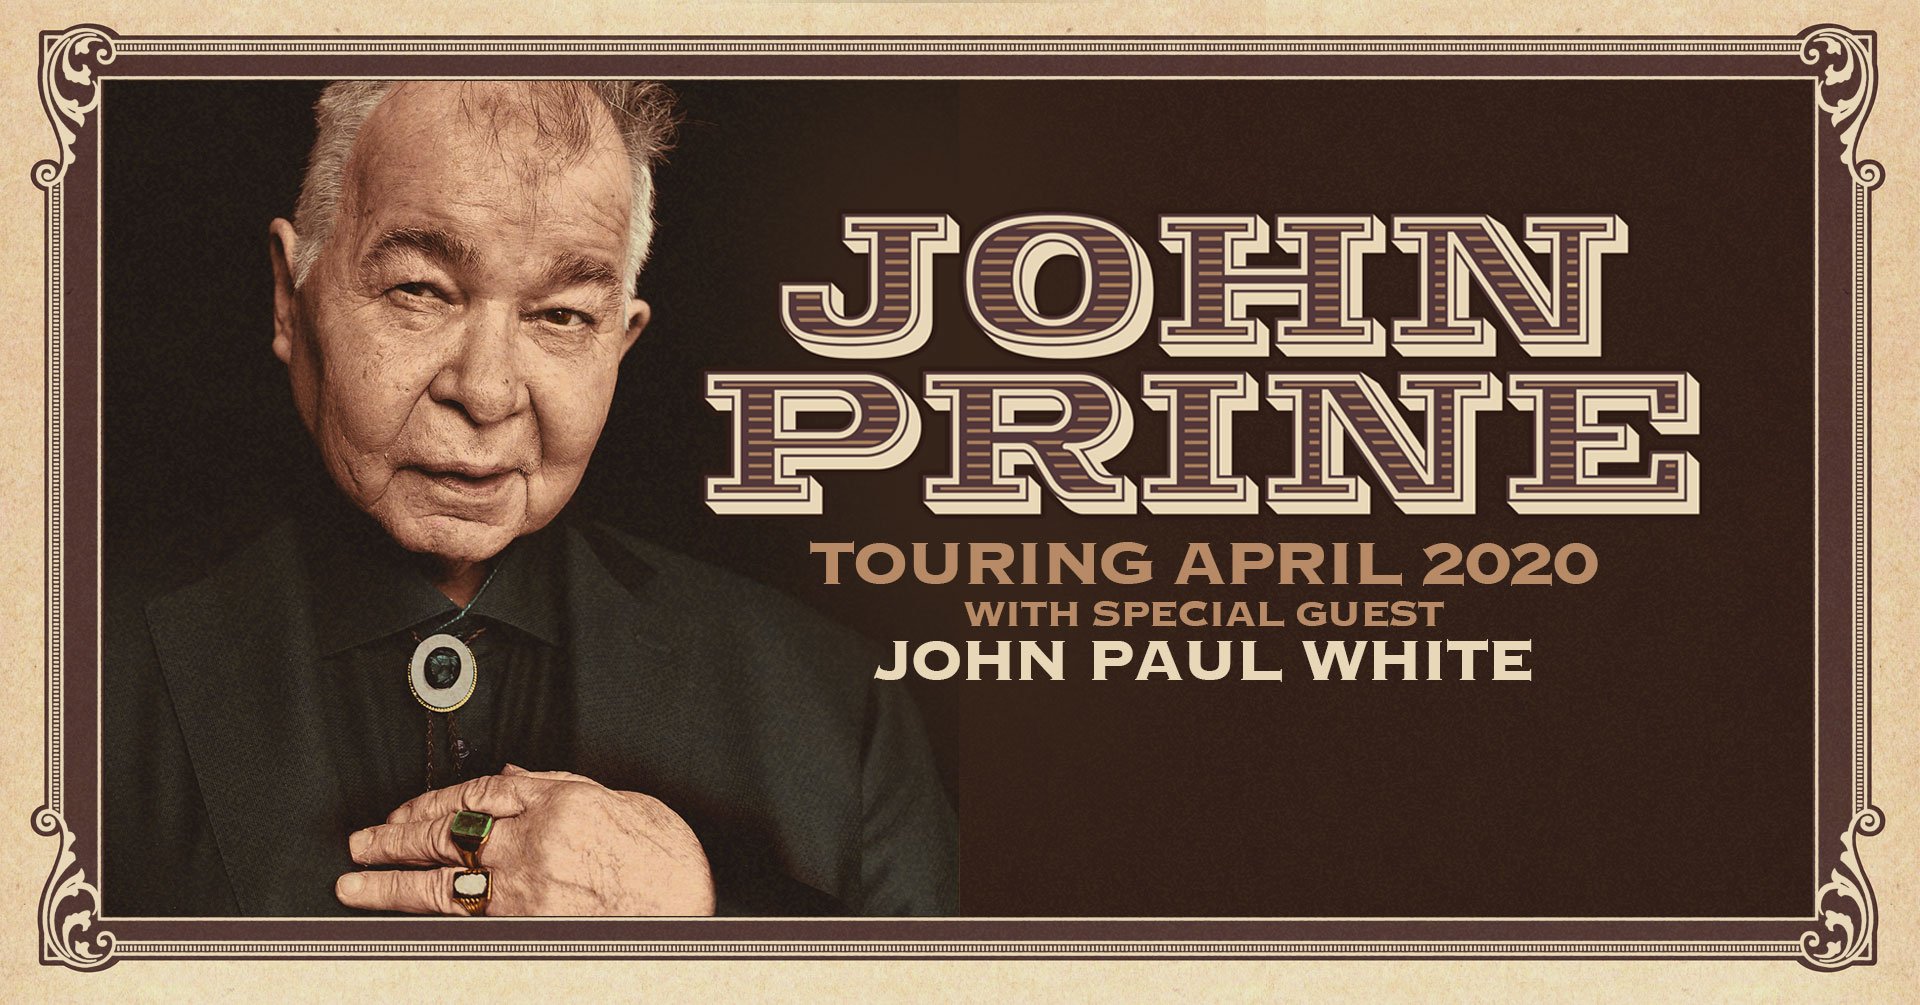 JOHN PRINE ANNOUNCES JOHN PAUL WHITE (THE CIVIL WARS) AS SPECIAL GUEST ON AUSTRALIAN TOUR